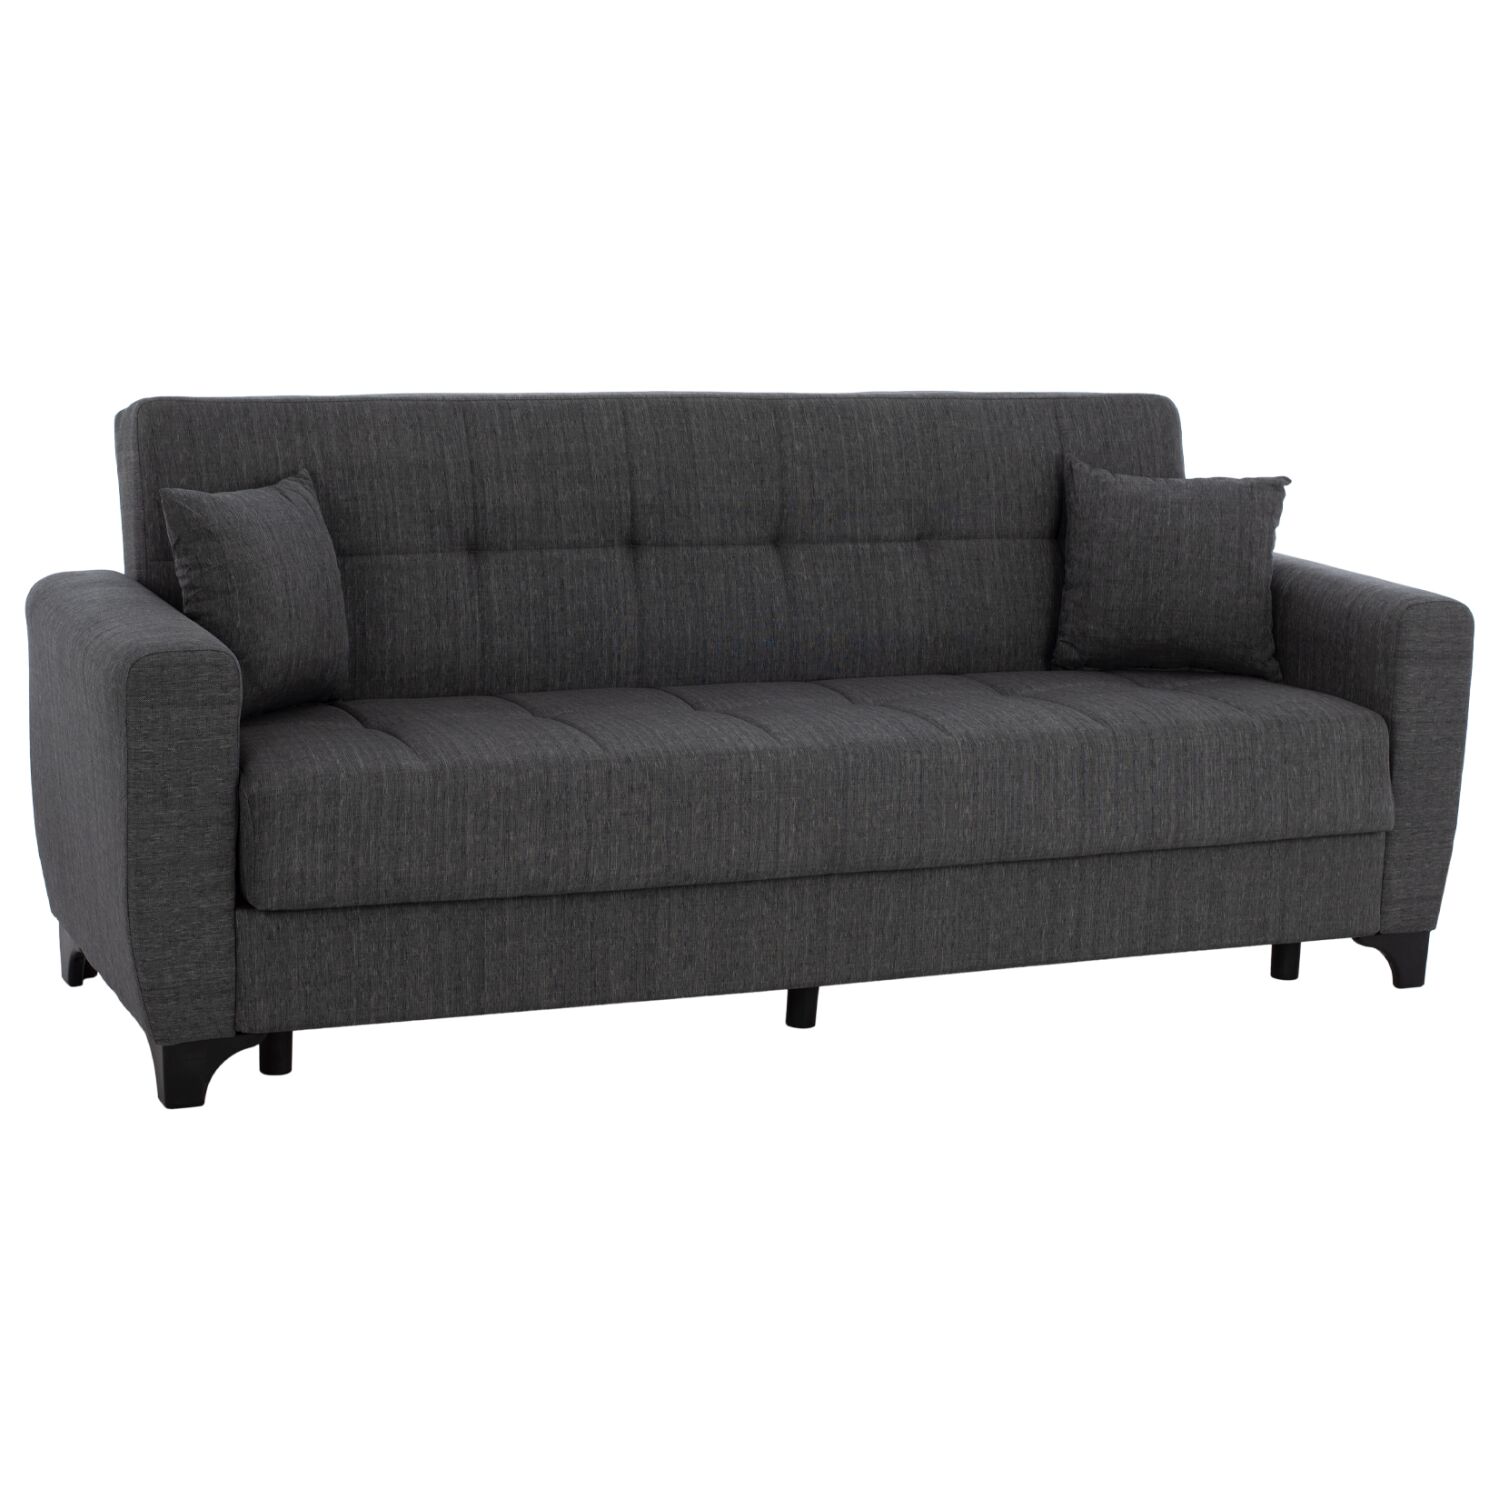 HM3242.03 sofa-bed, storage space, grey, 215x84x88cm, tall back